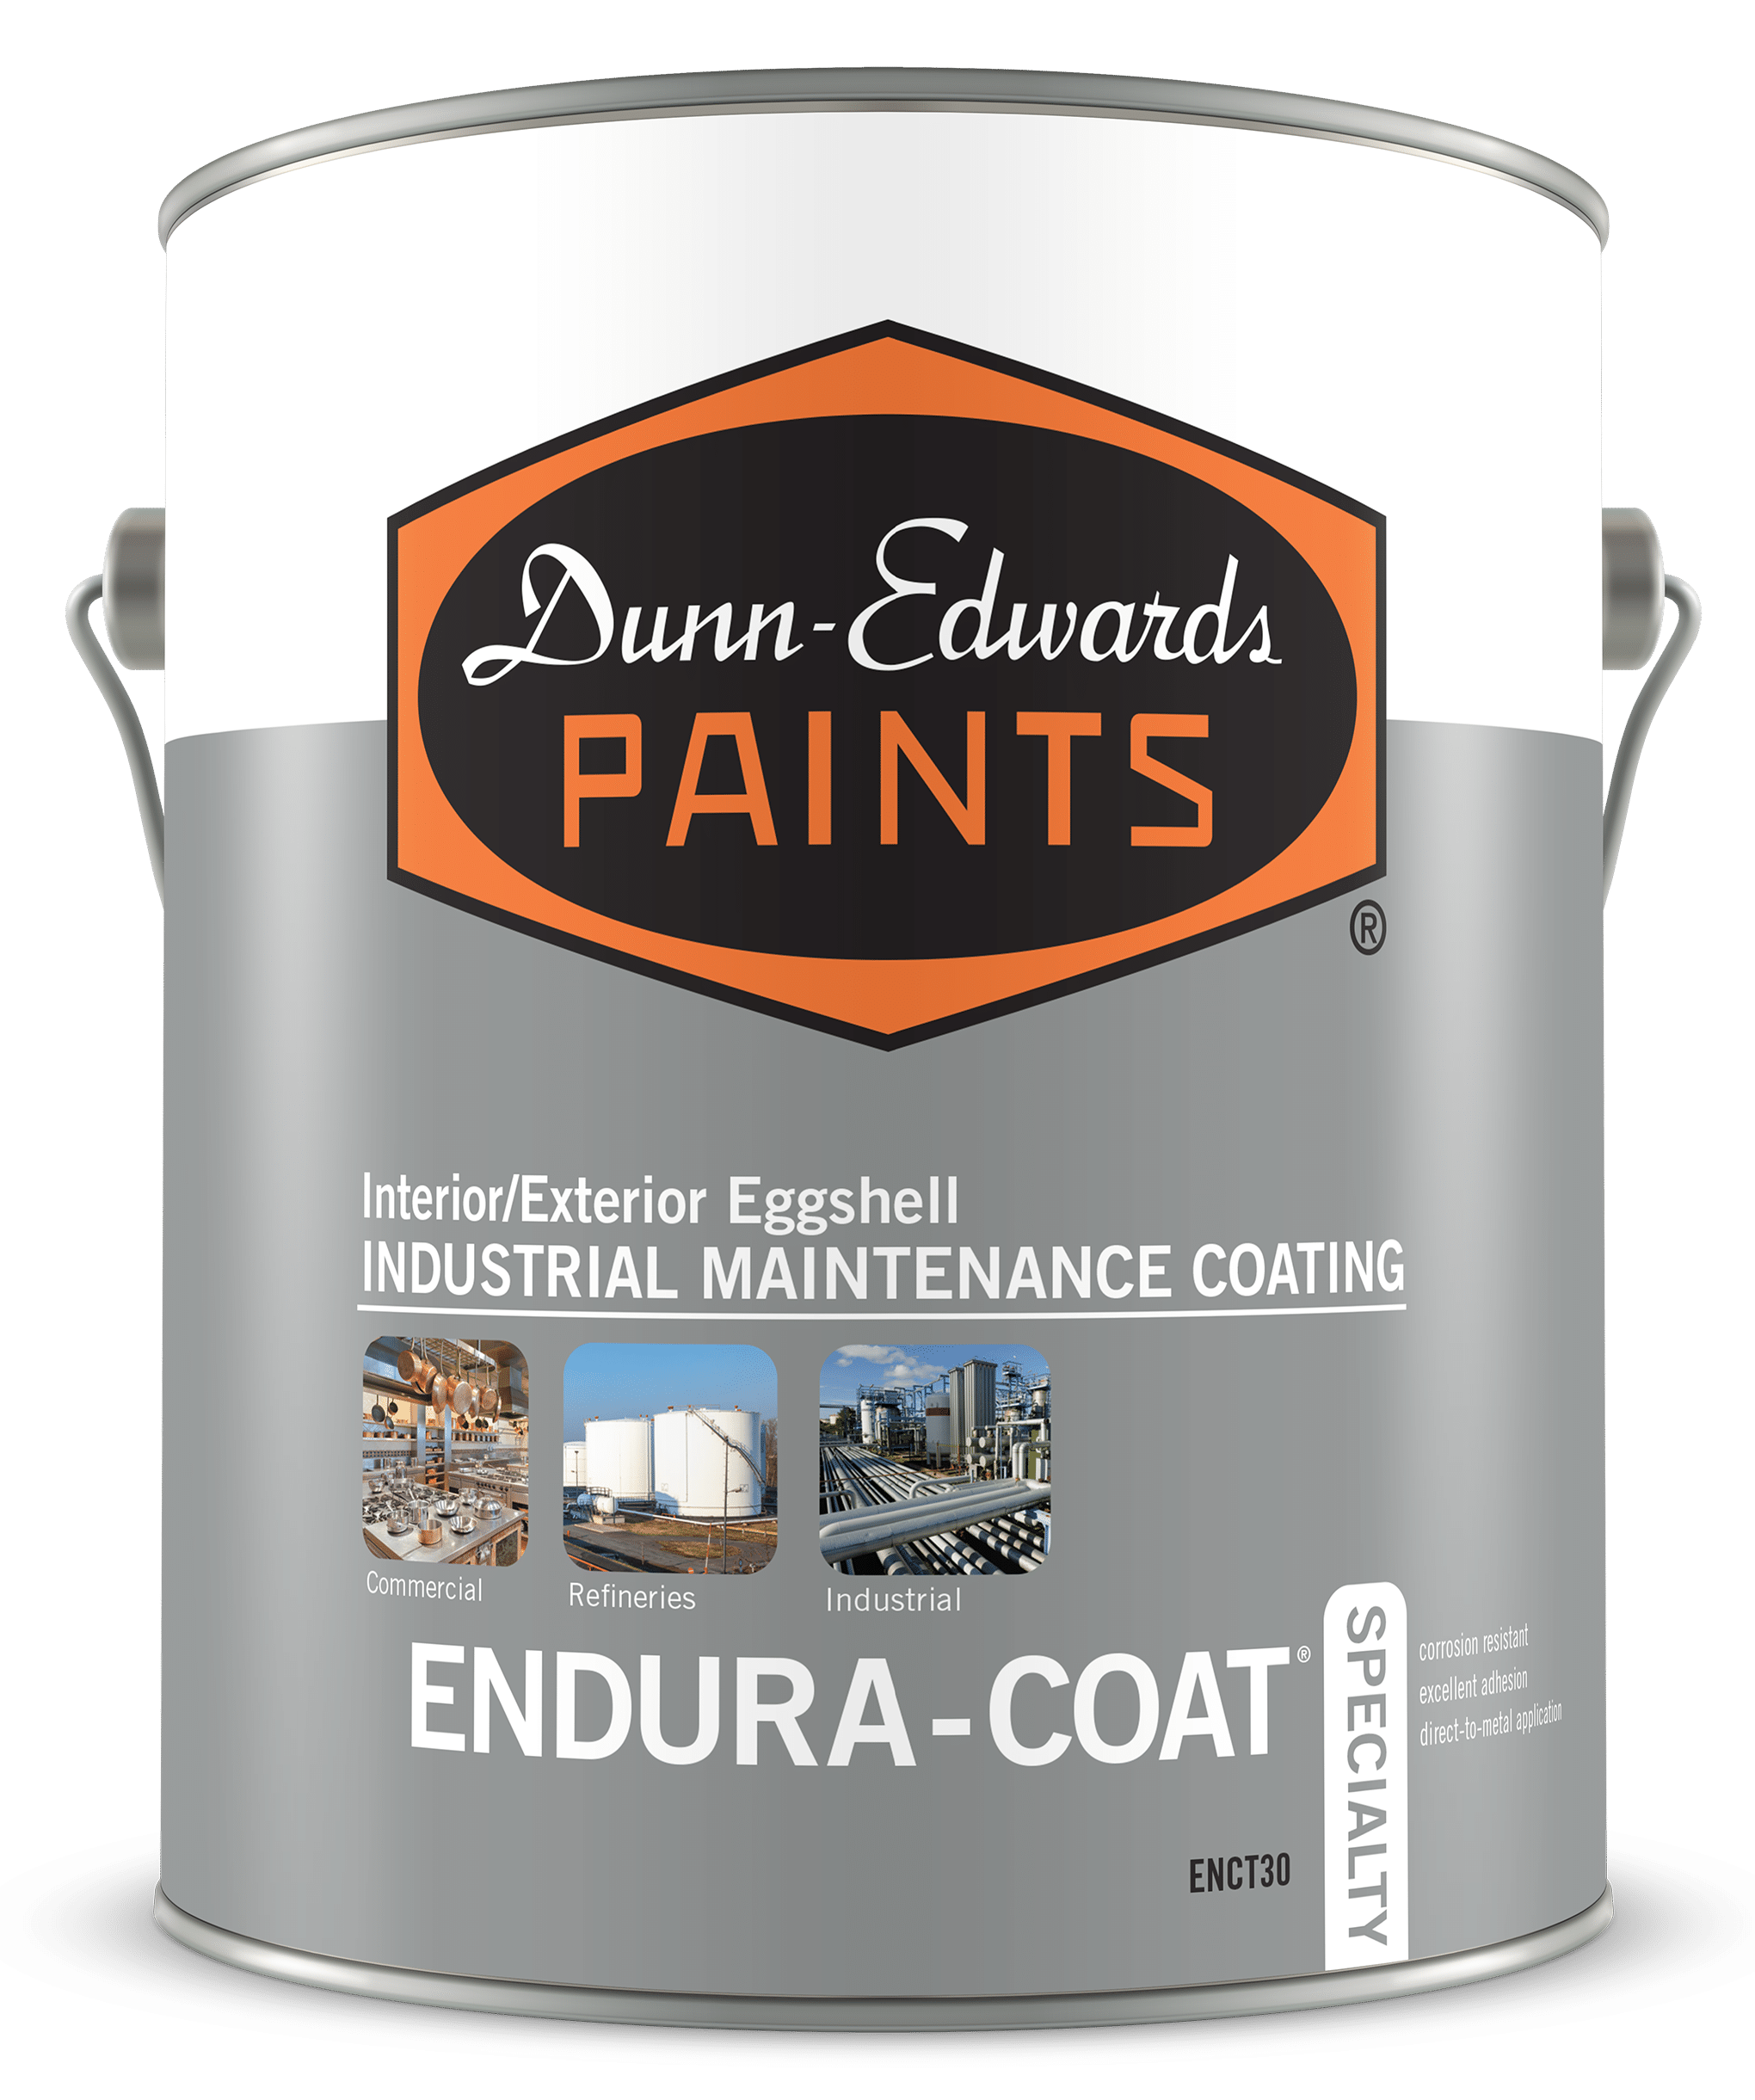 ENDURA-COAT Interior/Exterior Eggshell Industrial Maintenance Coating Can